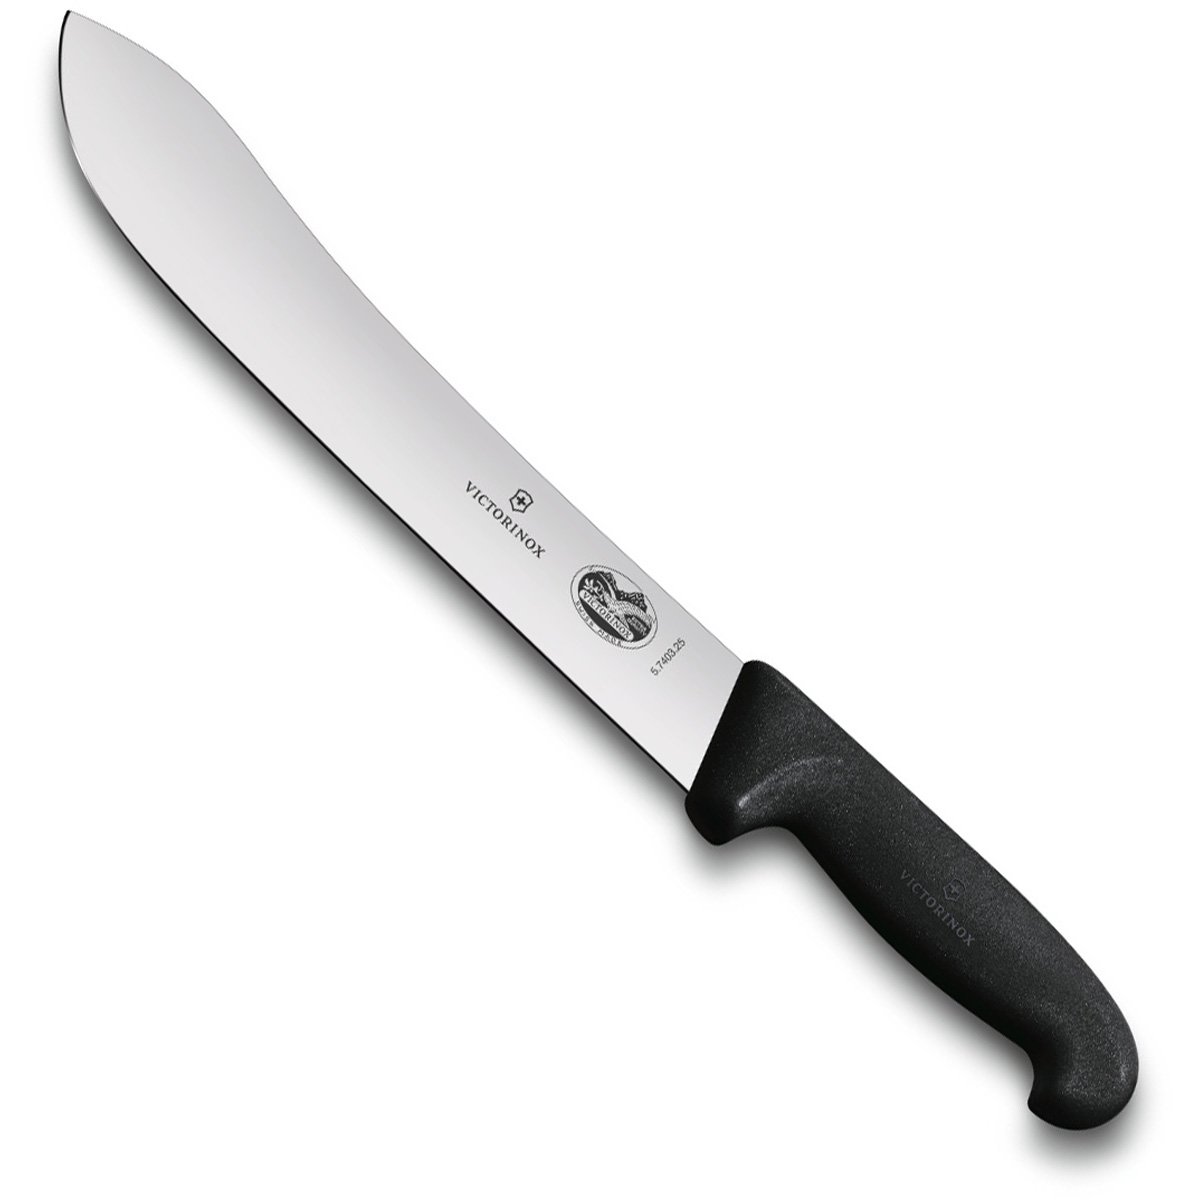 Victorinox Steak Knife - 12"" Blade.